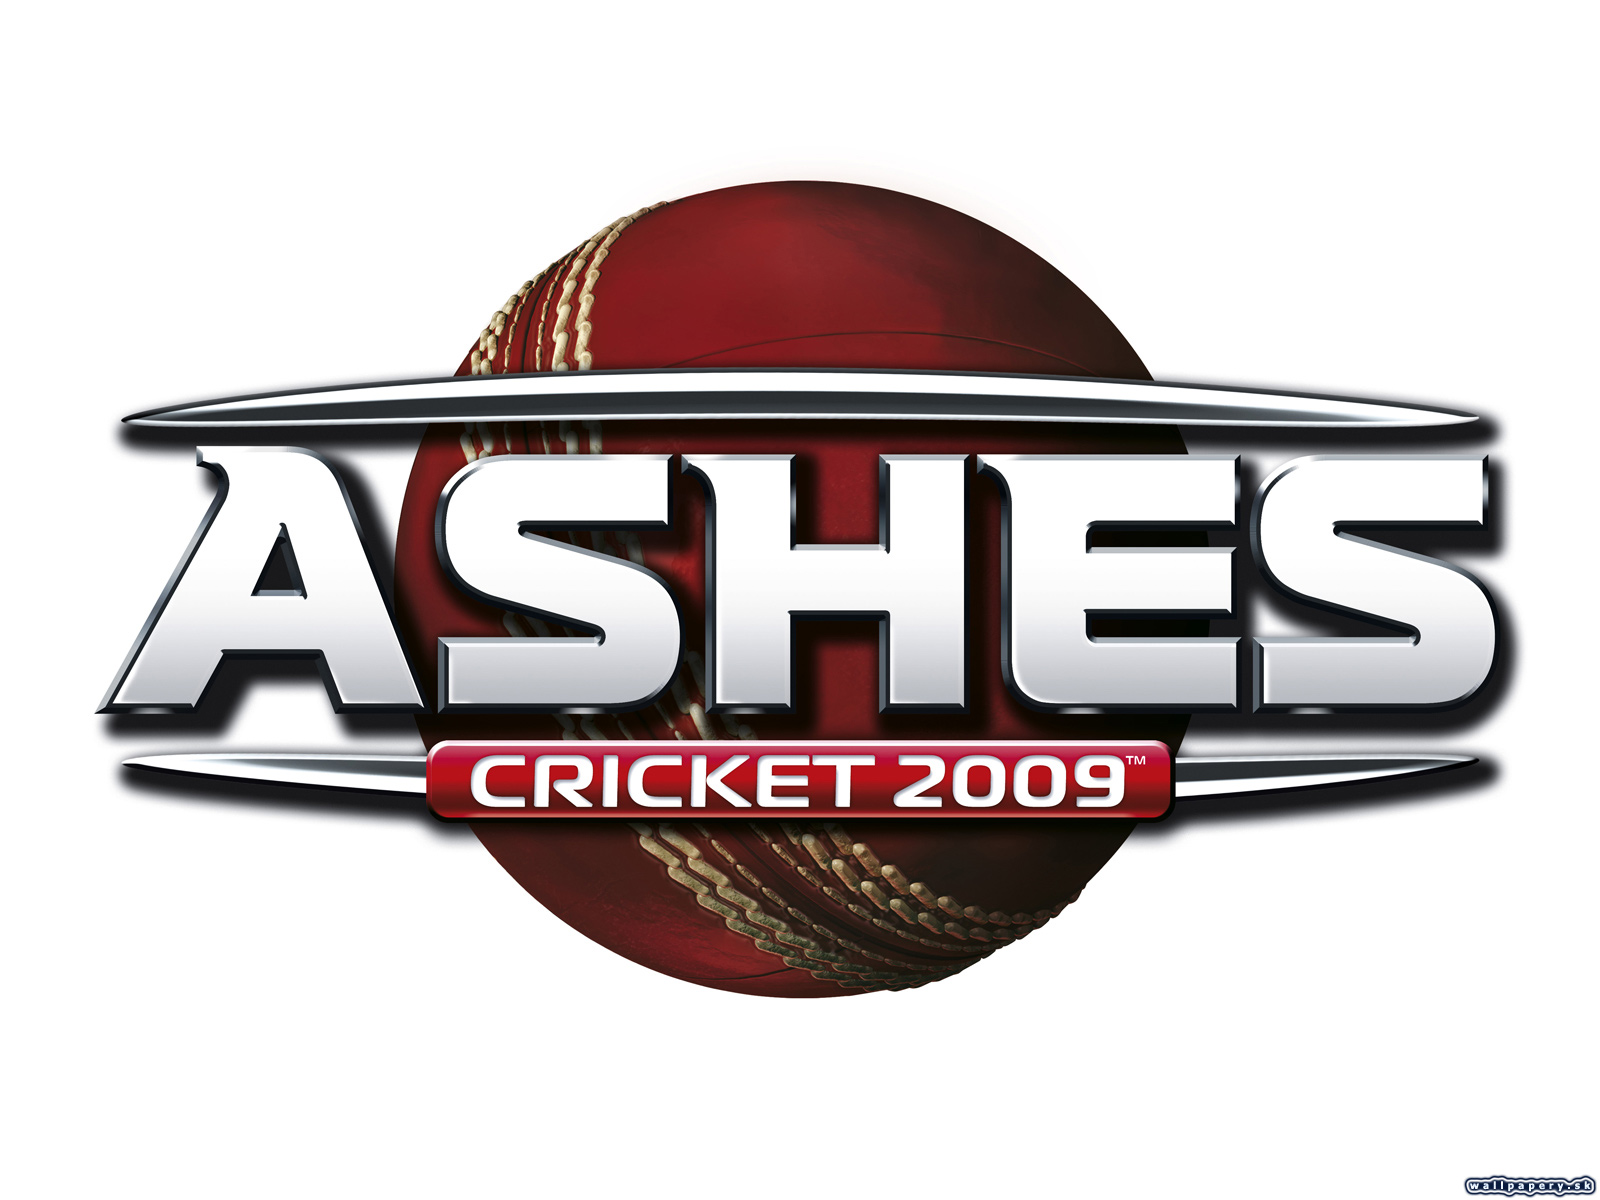 Ashes Cricket 2009 - wallpaper 1